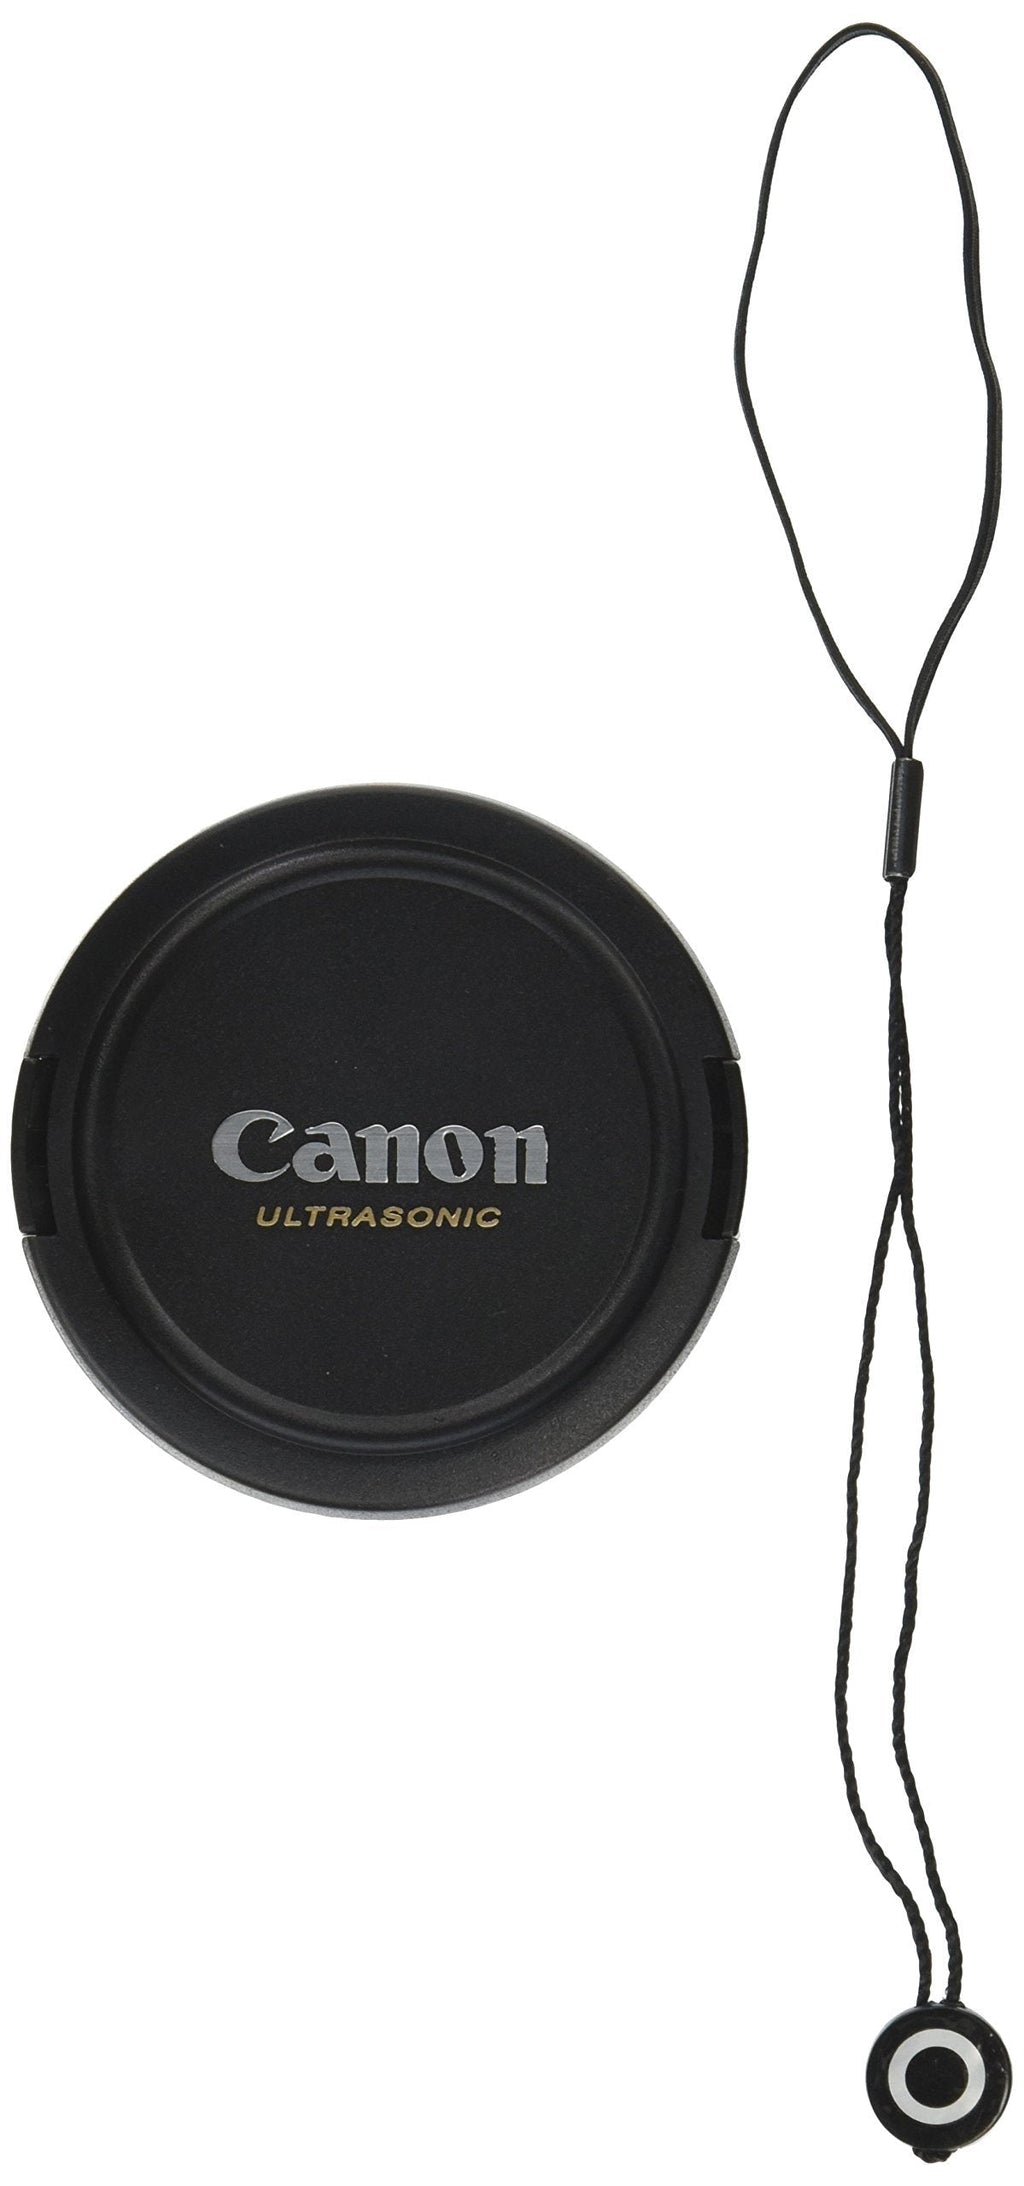 CowboyStudio 72mm Lens Cap for Canon Lens Replaces E-72U - Includes Lens Cap Holder